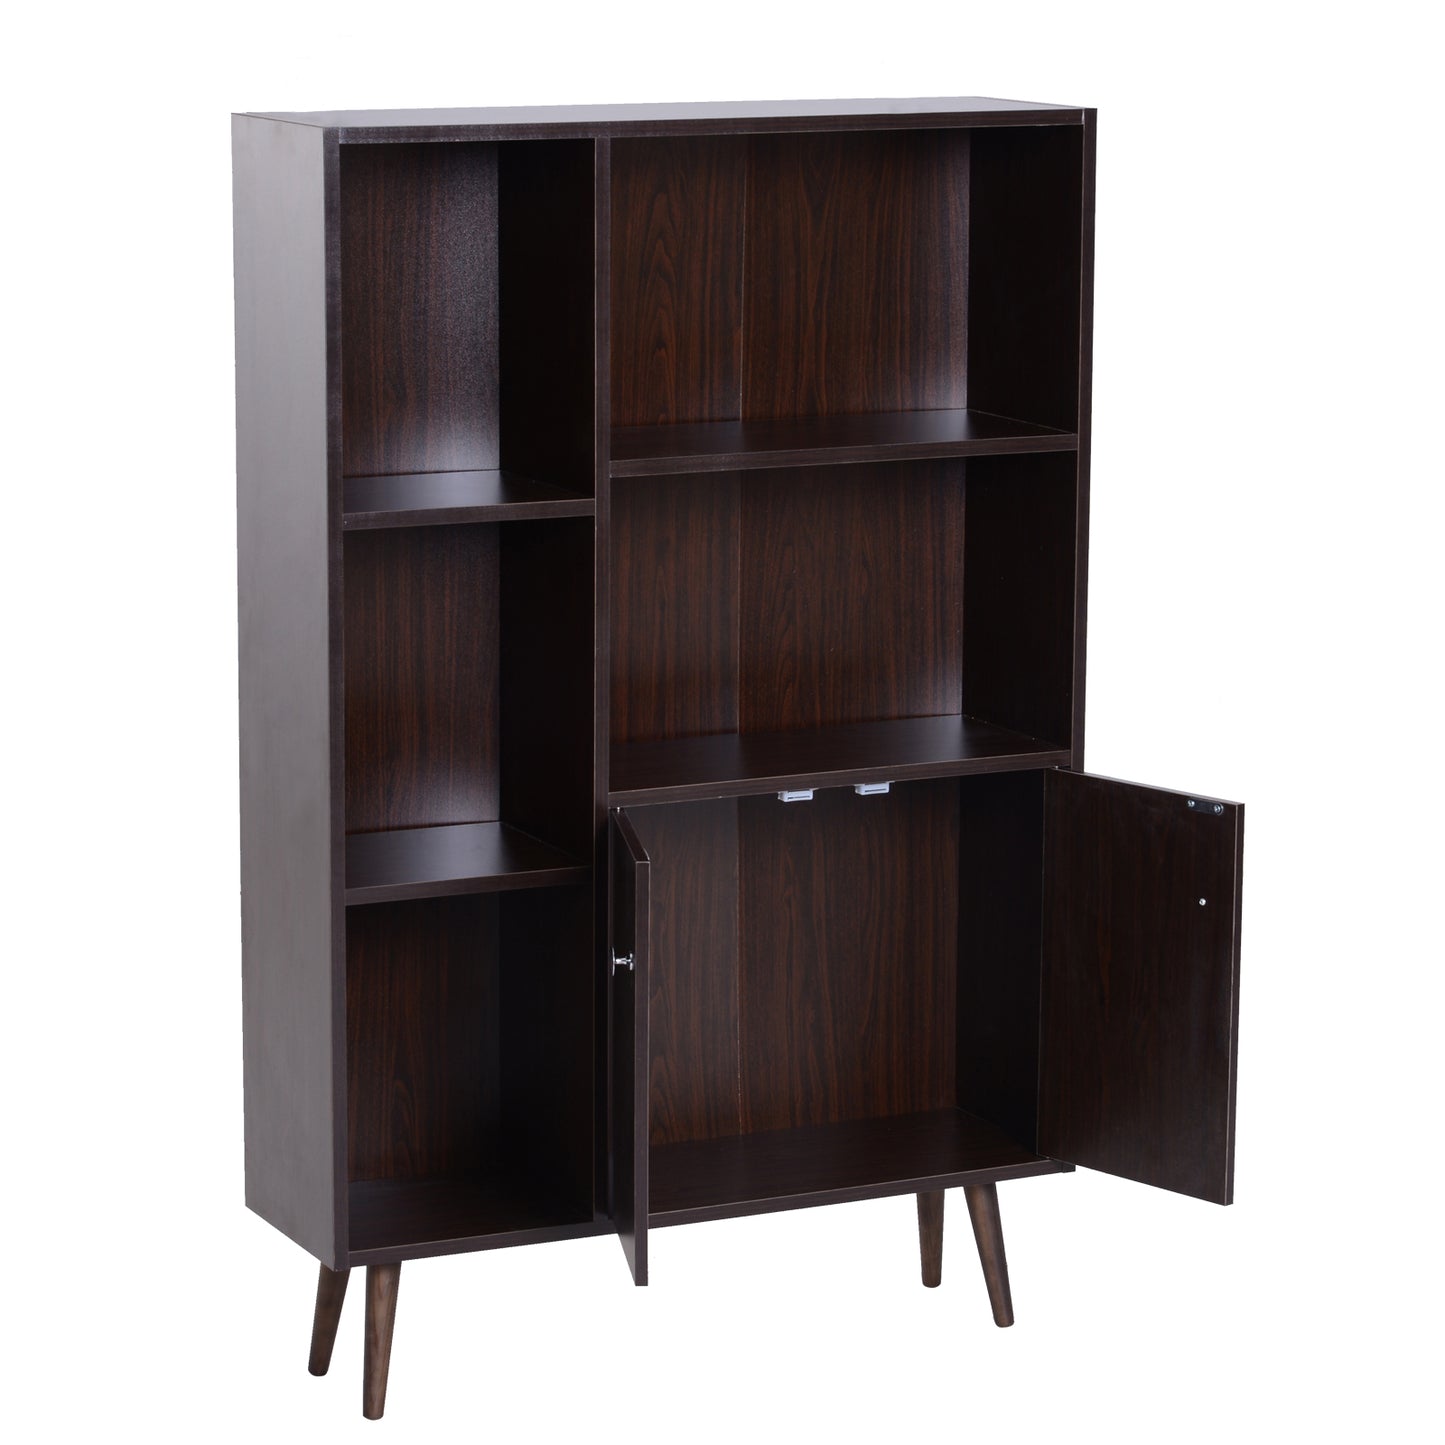 HOMCOM Open Bookcase Cabinet Shelves W/ Two Doors, 80W x 23.5D x 118Hcm-Walnut